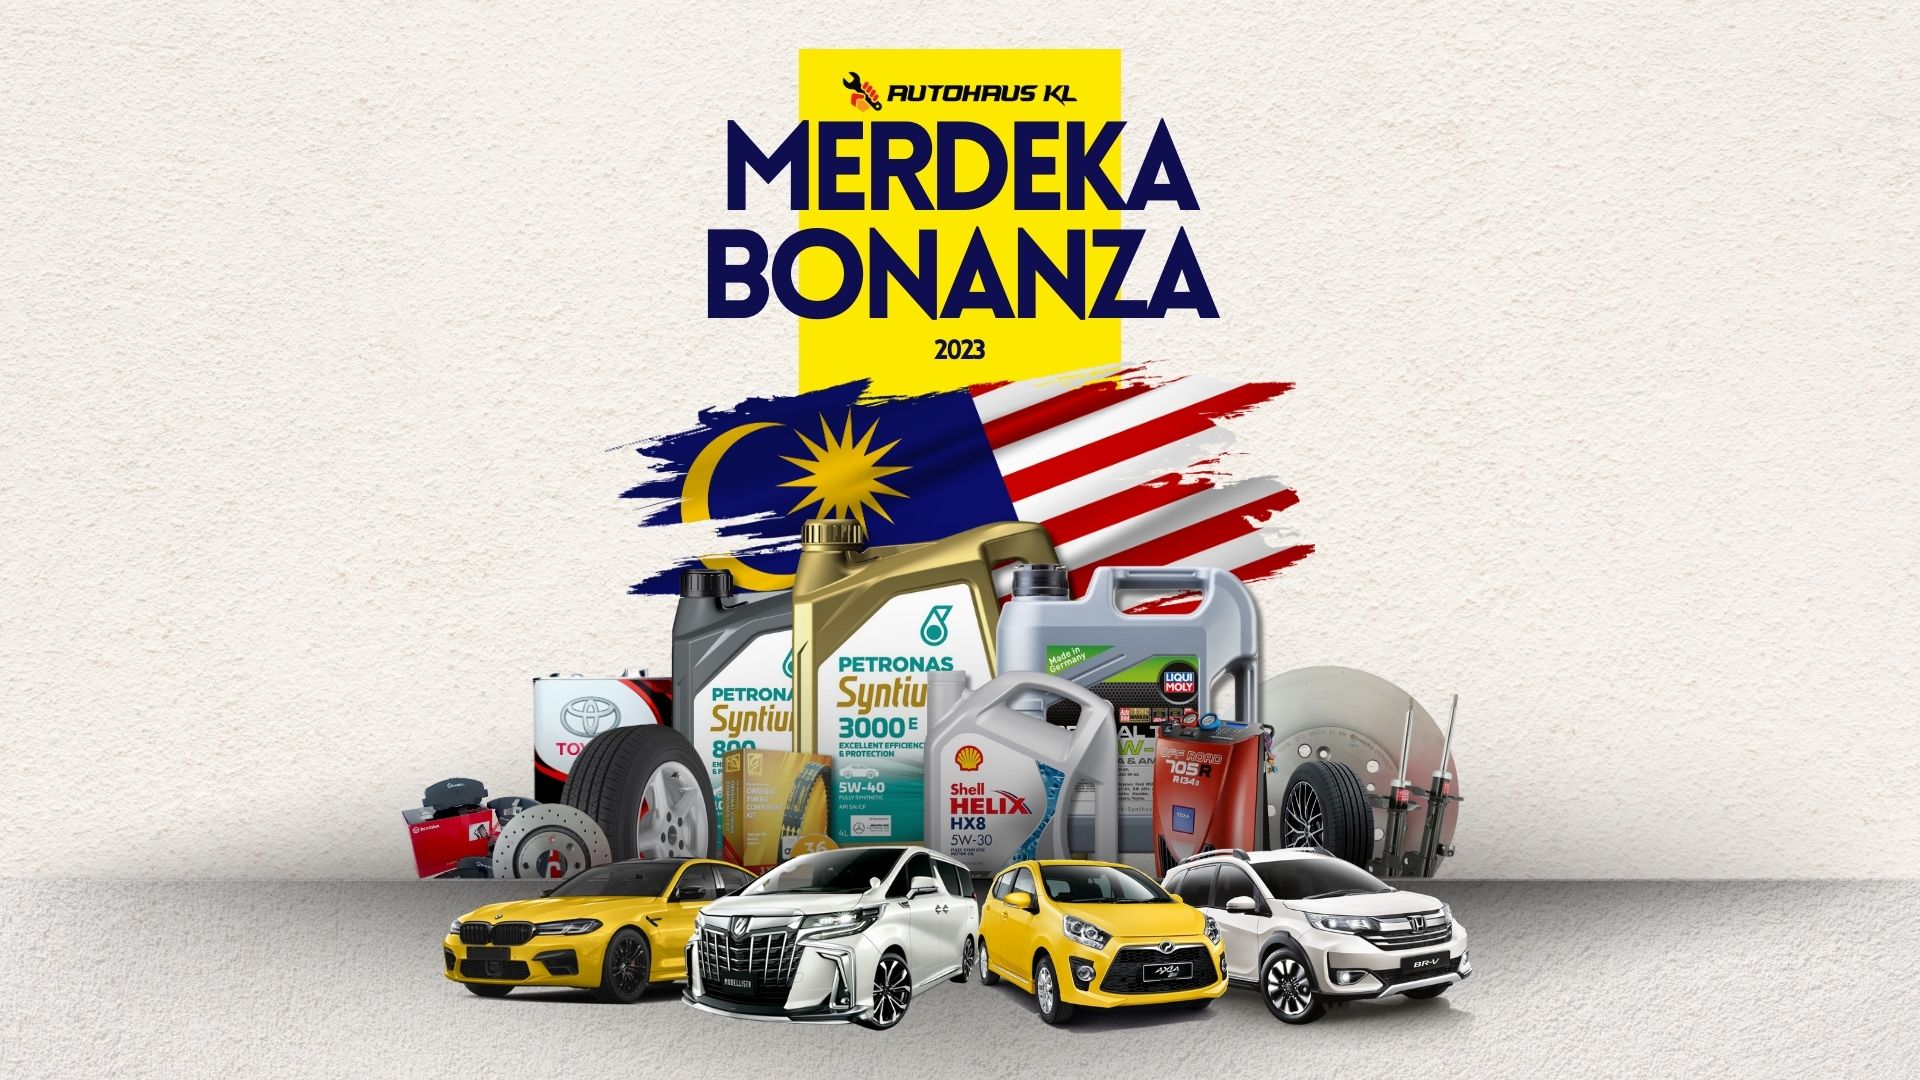 merdeka bonanza 2023 promotion autohaus kl